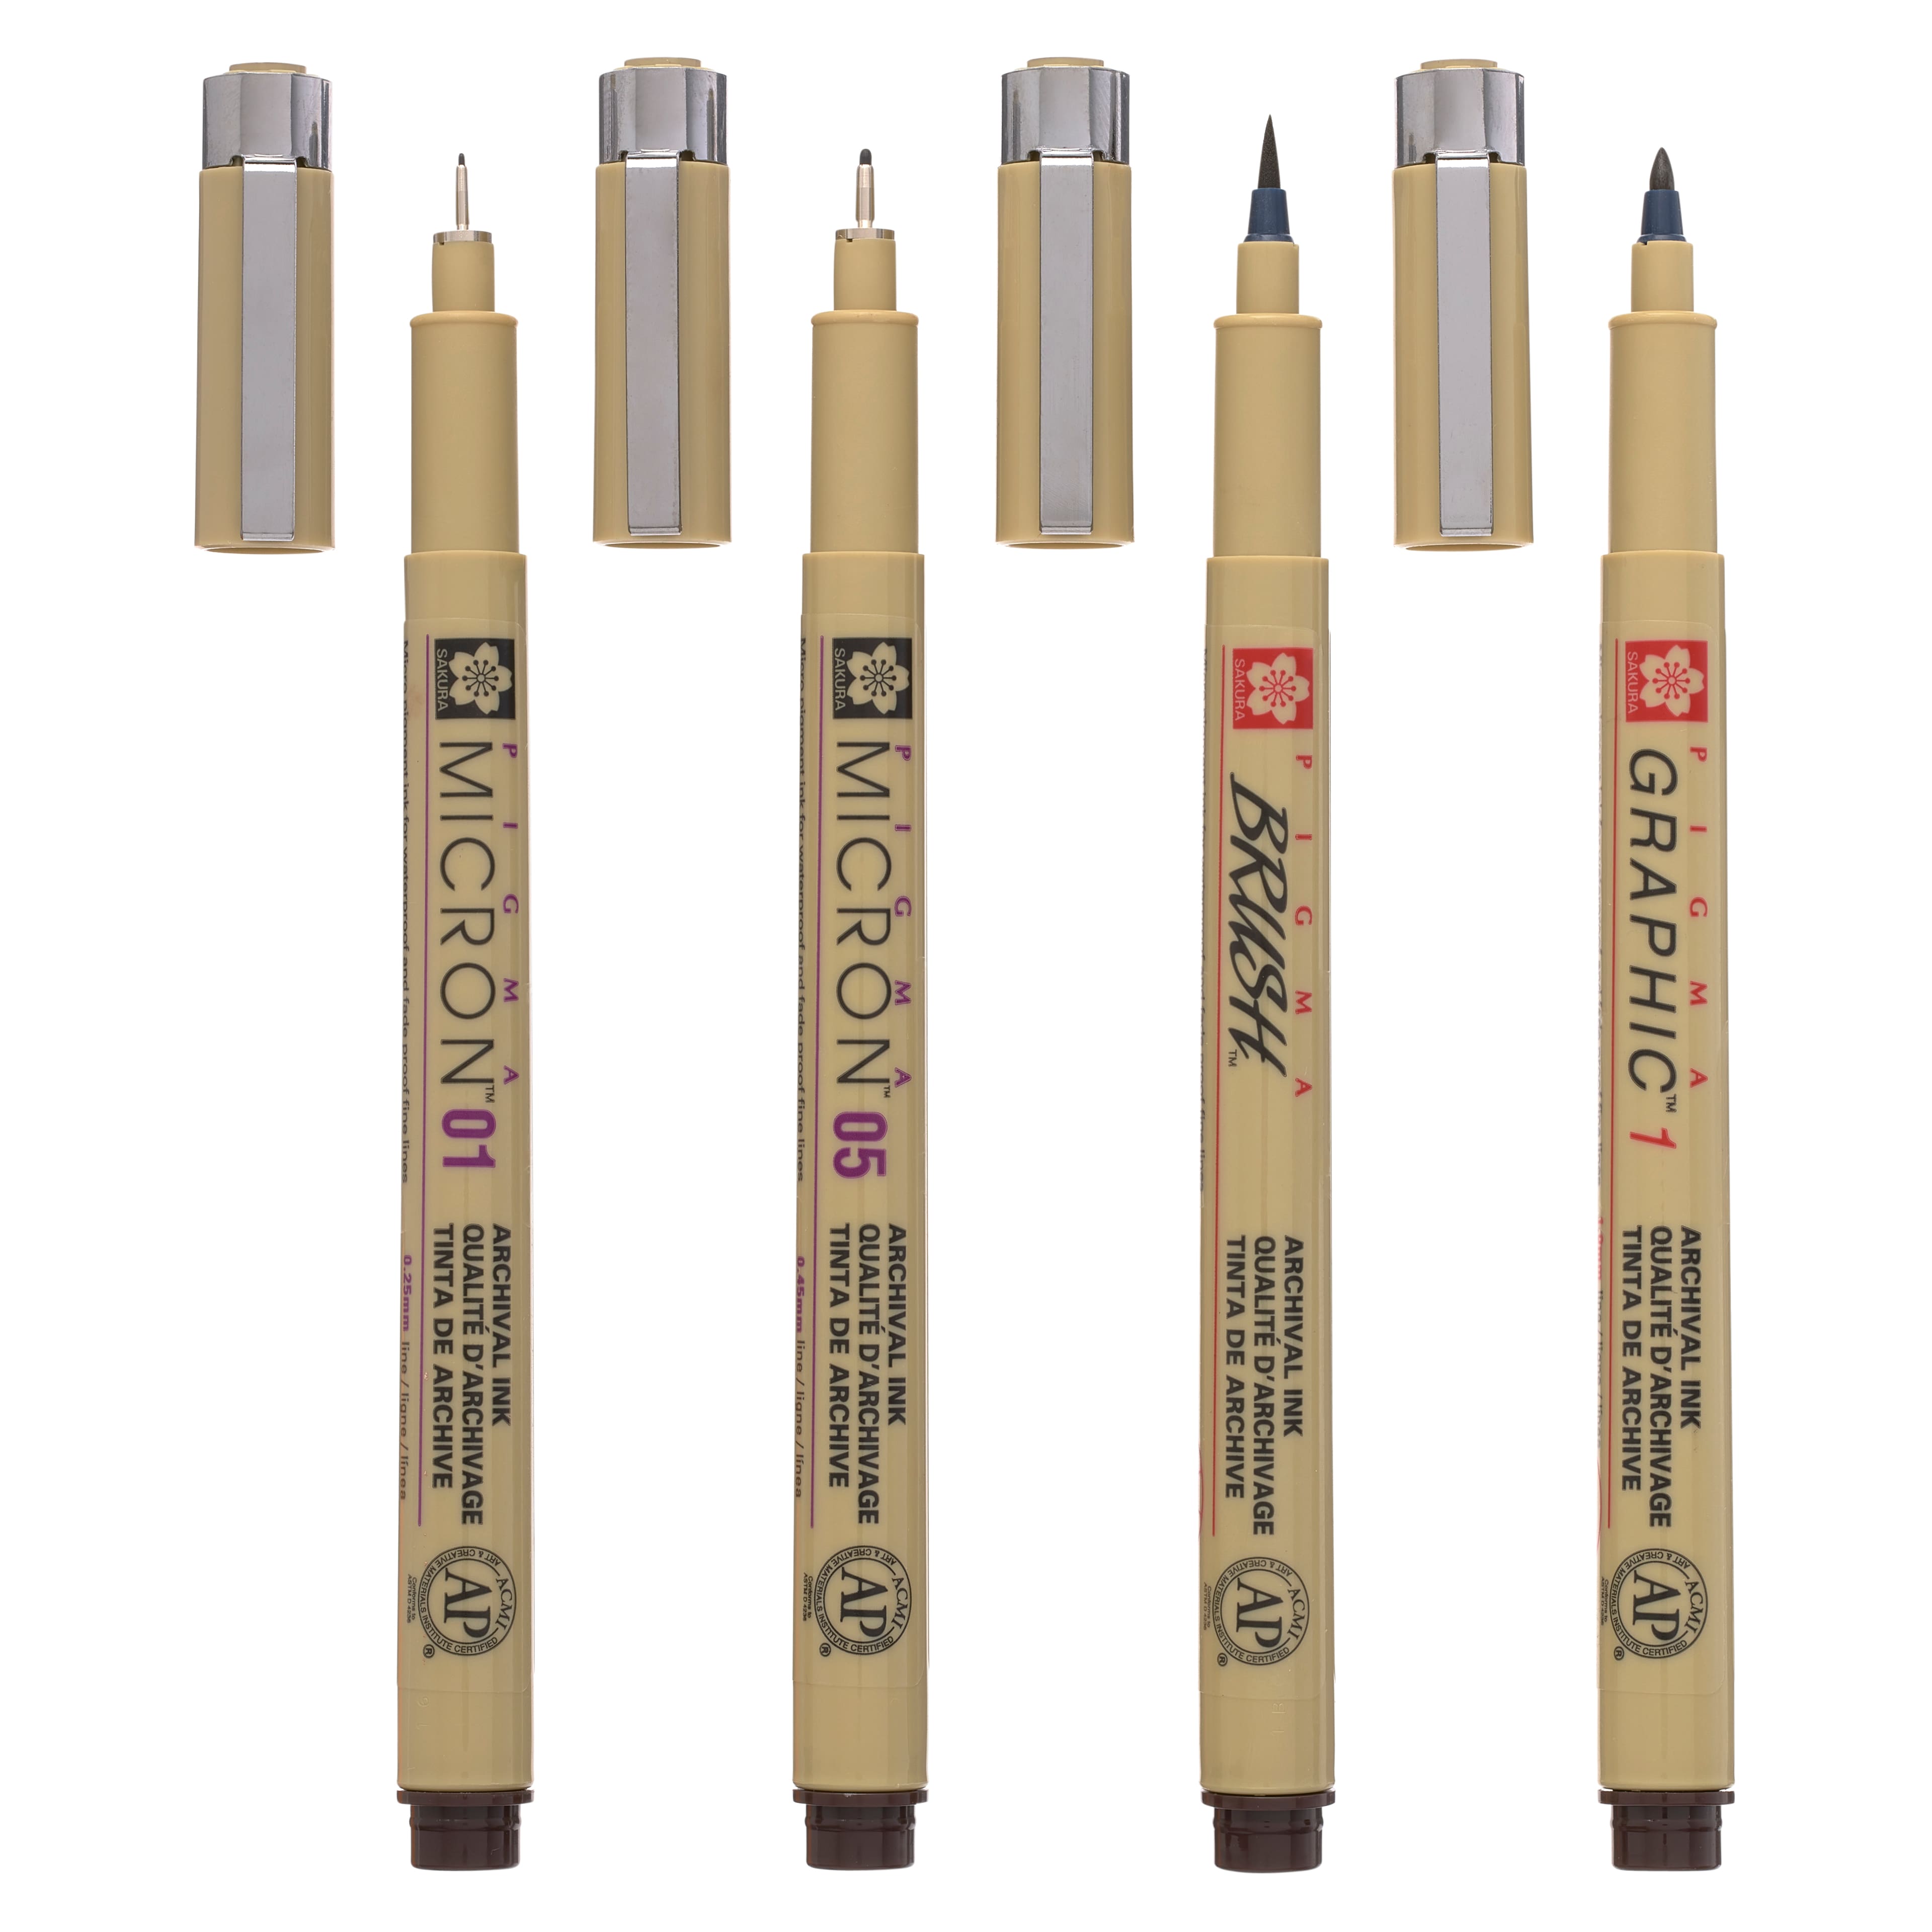 Sakura Pigma Micron Graphic Pens - Set of 3, 1 mm